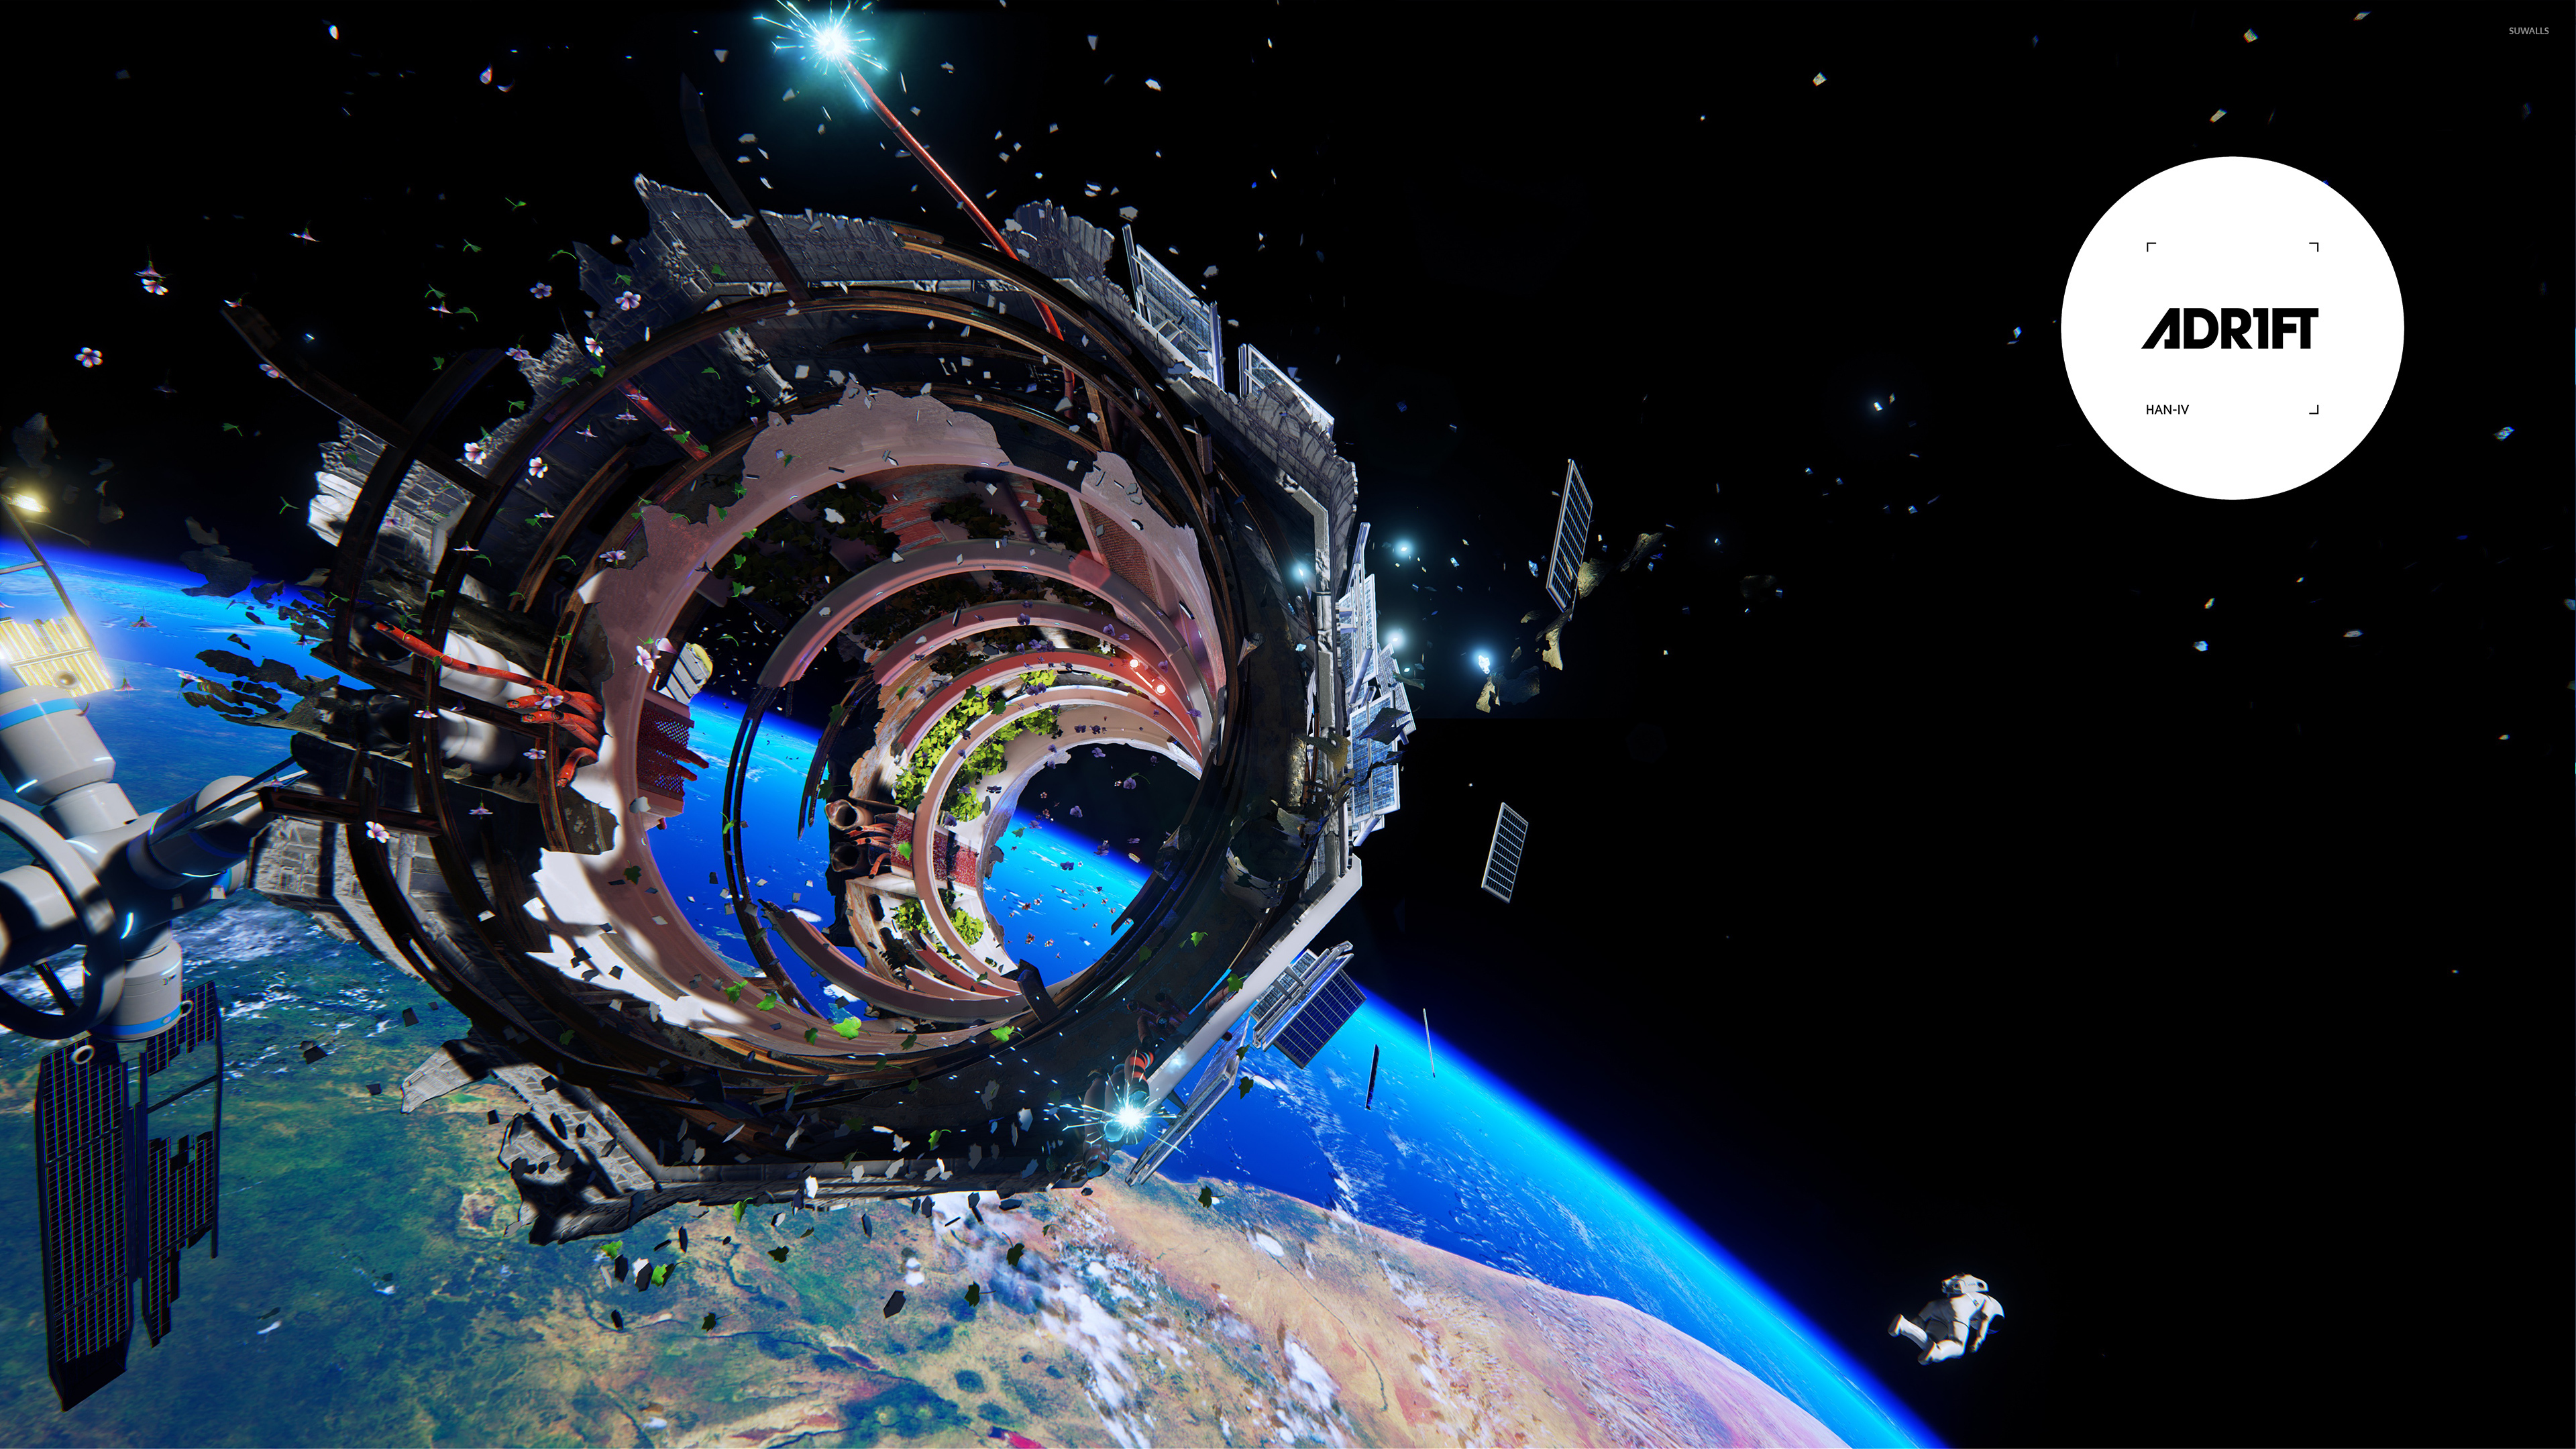 Spaceship Werck In Adr1ft Wallpaper Game